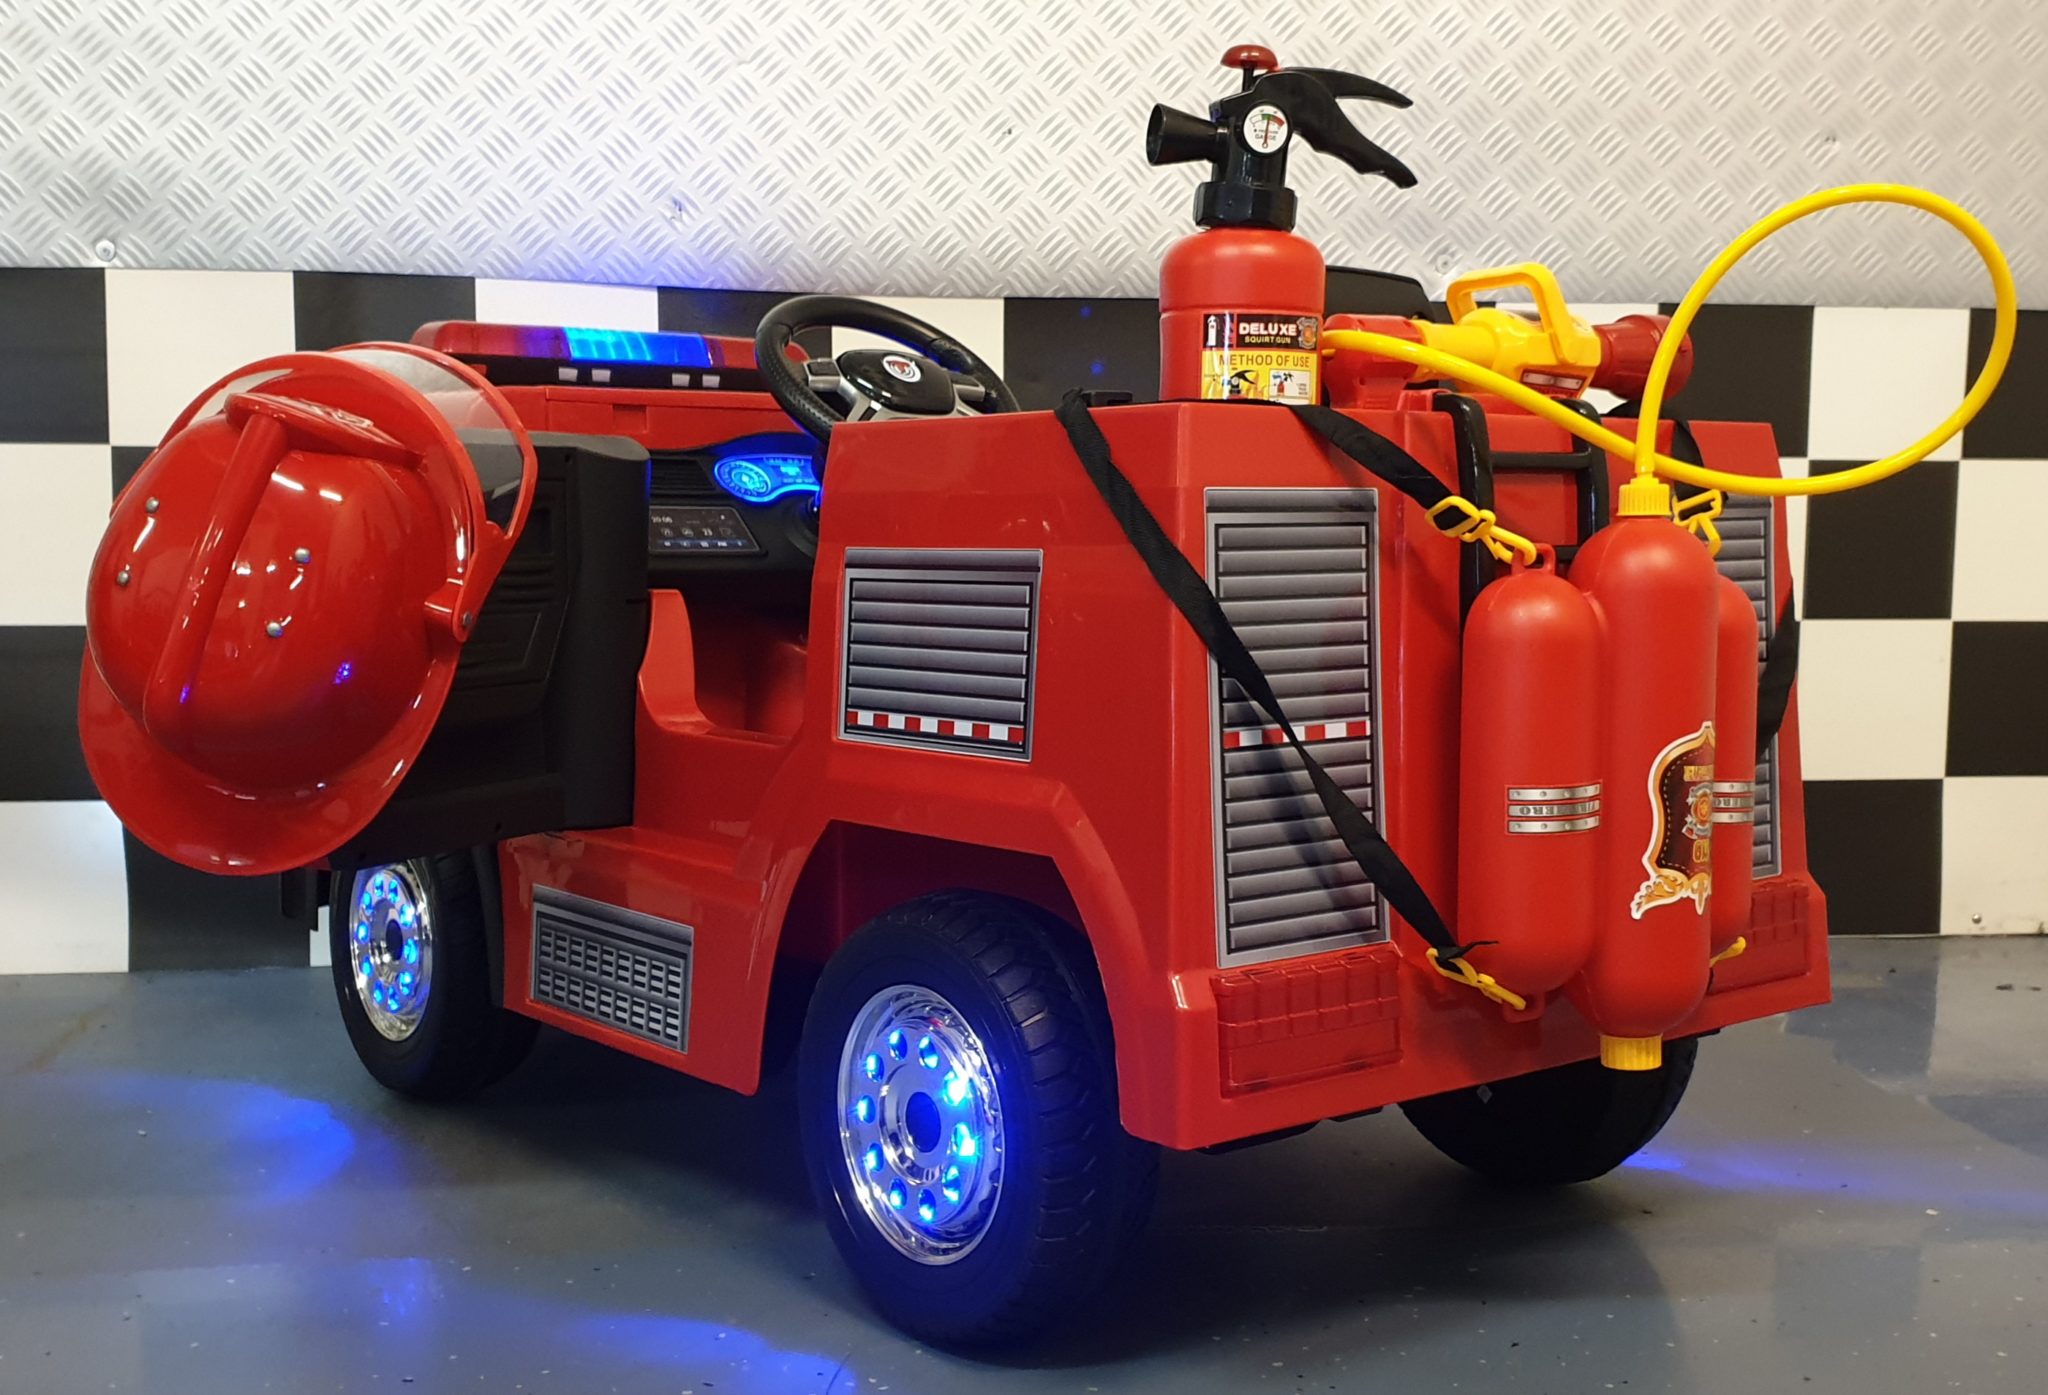 Fantastisch Europa opleggen KINDERAUTO BRANDWEERAUTO FIRE TRUCK | ROOD | 12V | 2.4G RC - Kids-Accu Cars